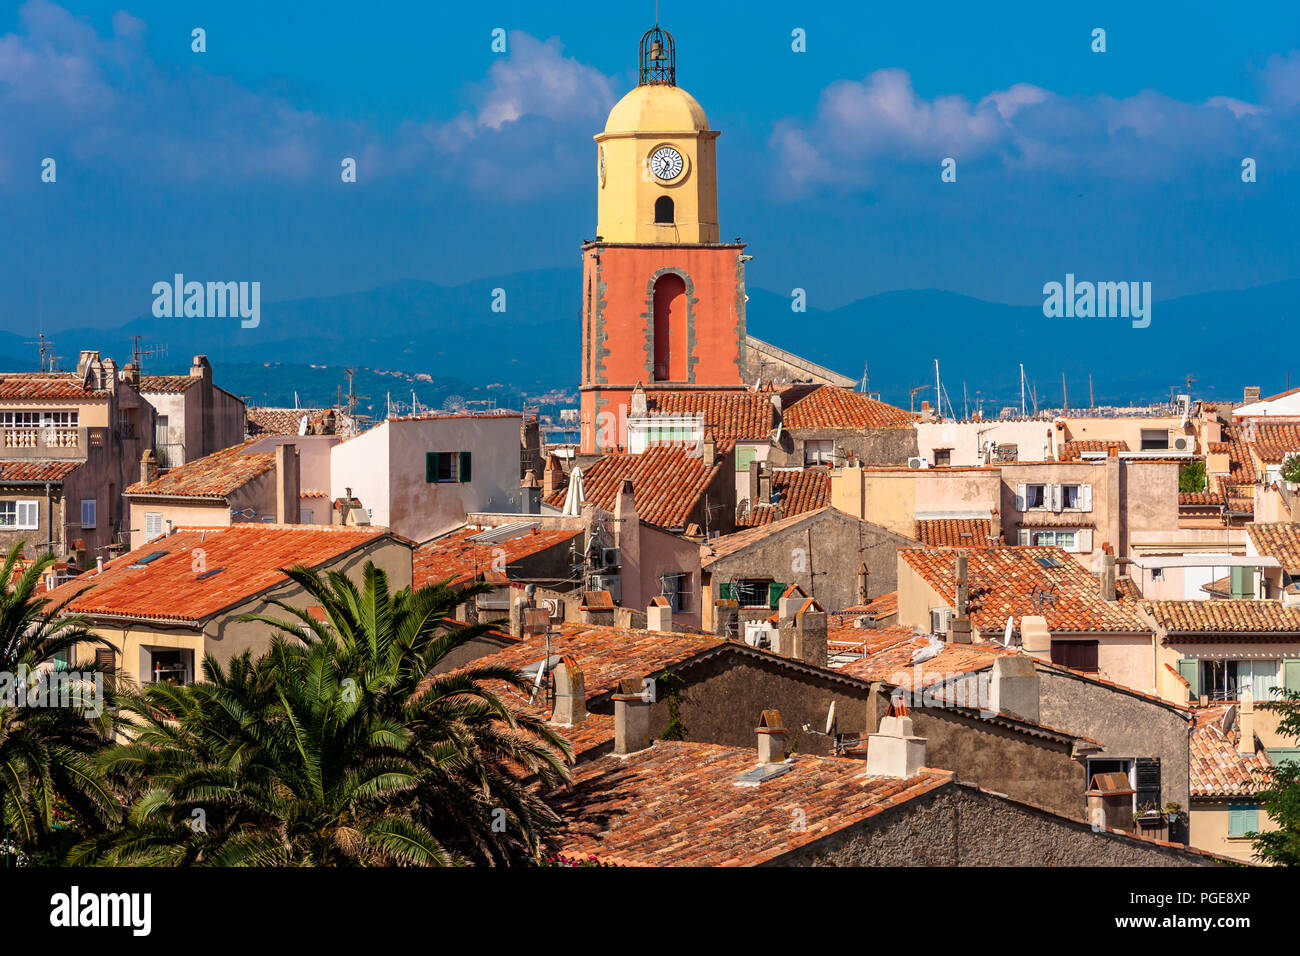 St Tropez, France Stock Photo